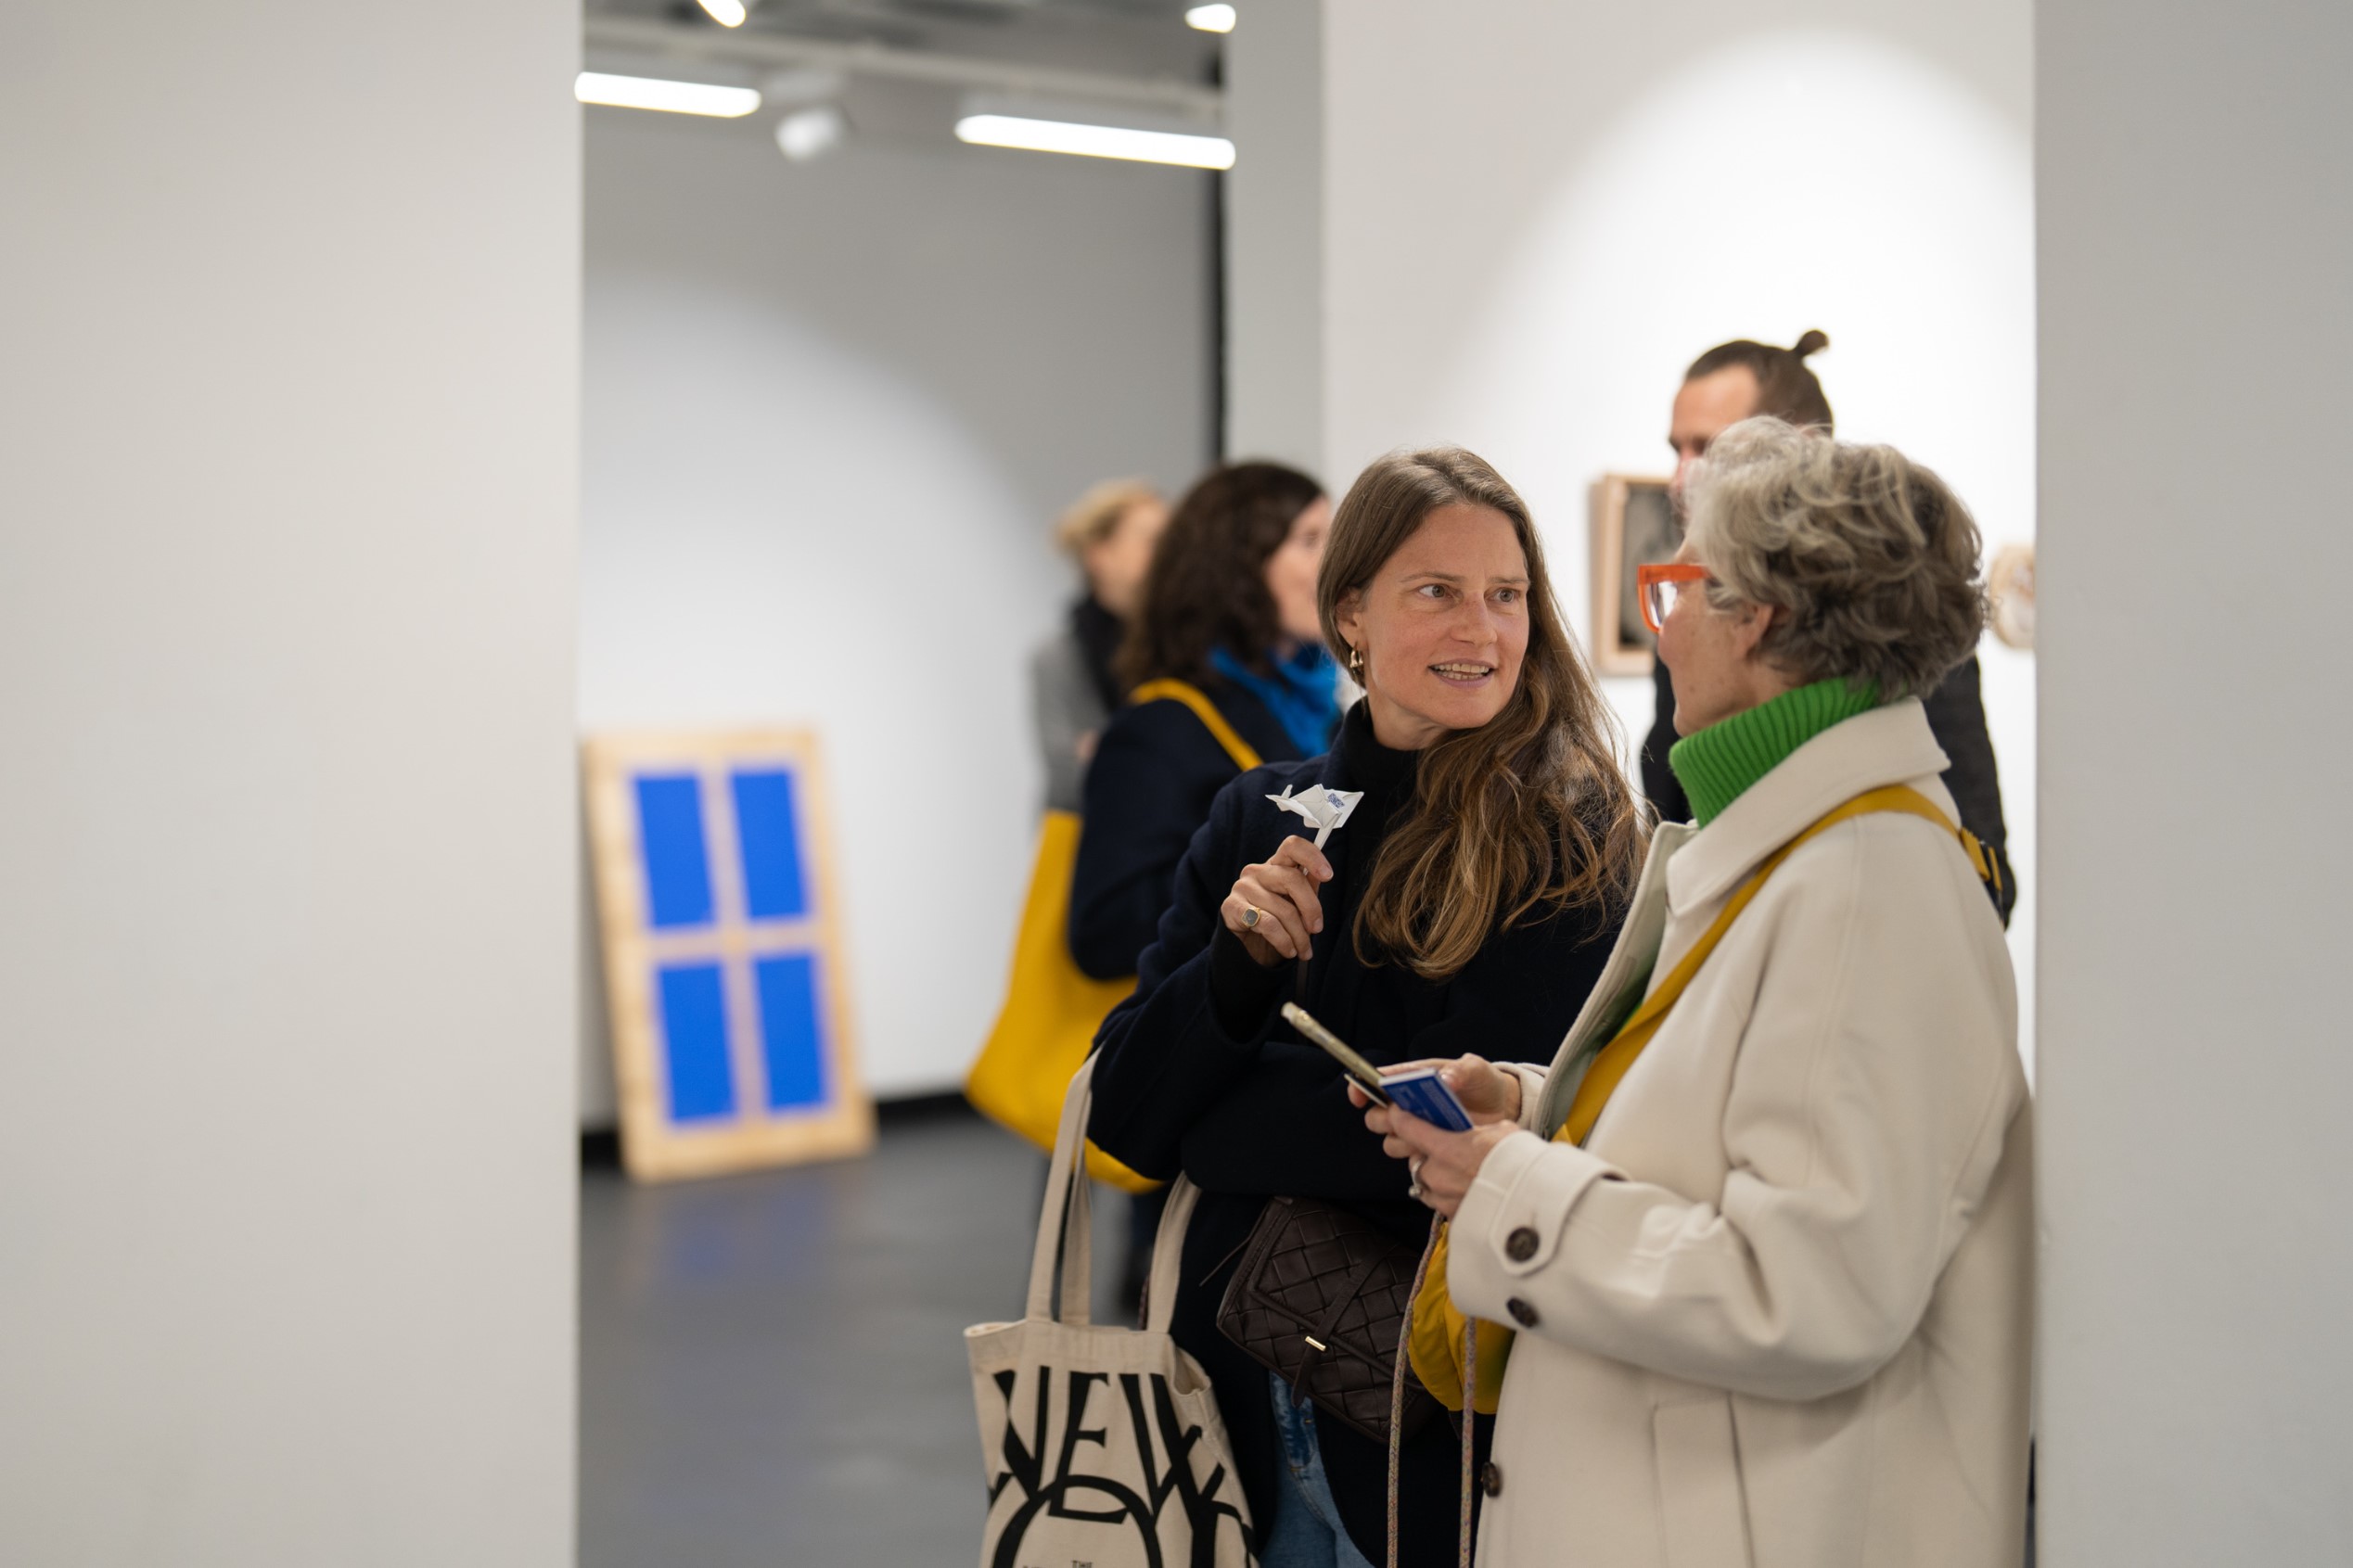 Exhibition opening of "Utopia - a collective work" with the five Hamburg artists Kerstin Inga Tolpeit, Lara Leonie Keuthen, Maren Holz, Roman Dachsel and Bente Singelmann. © Jan-Marius Komorek